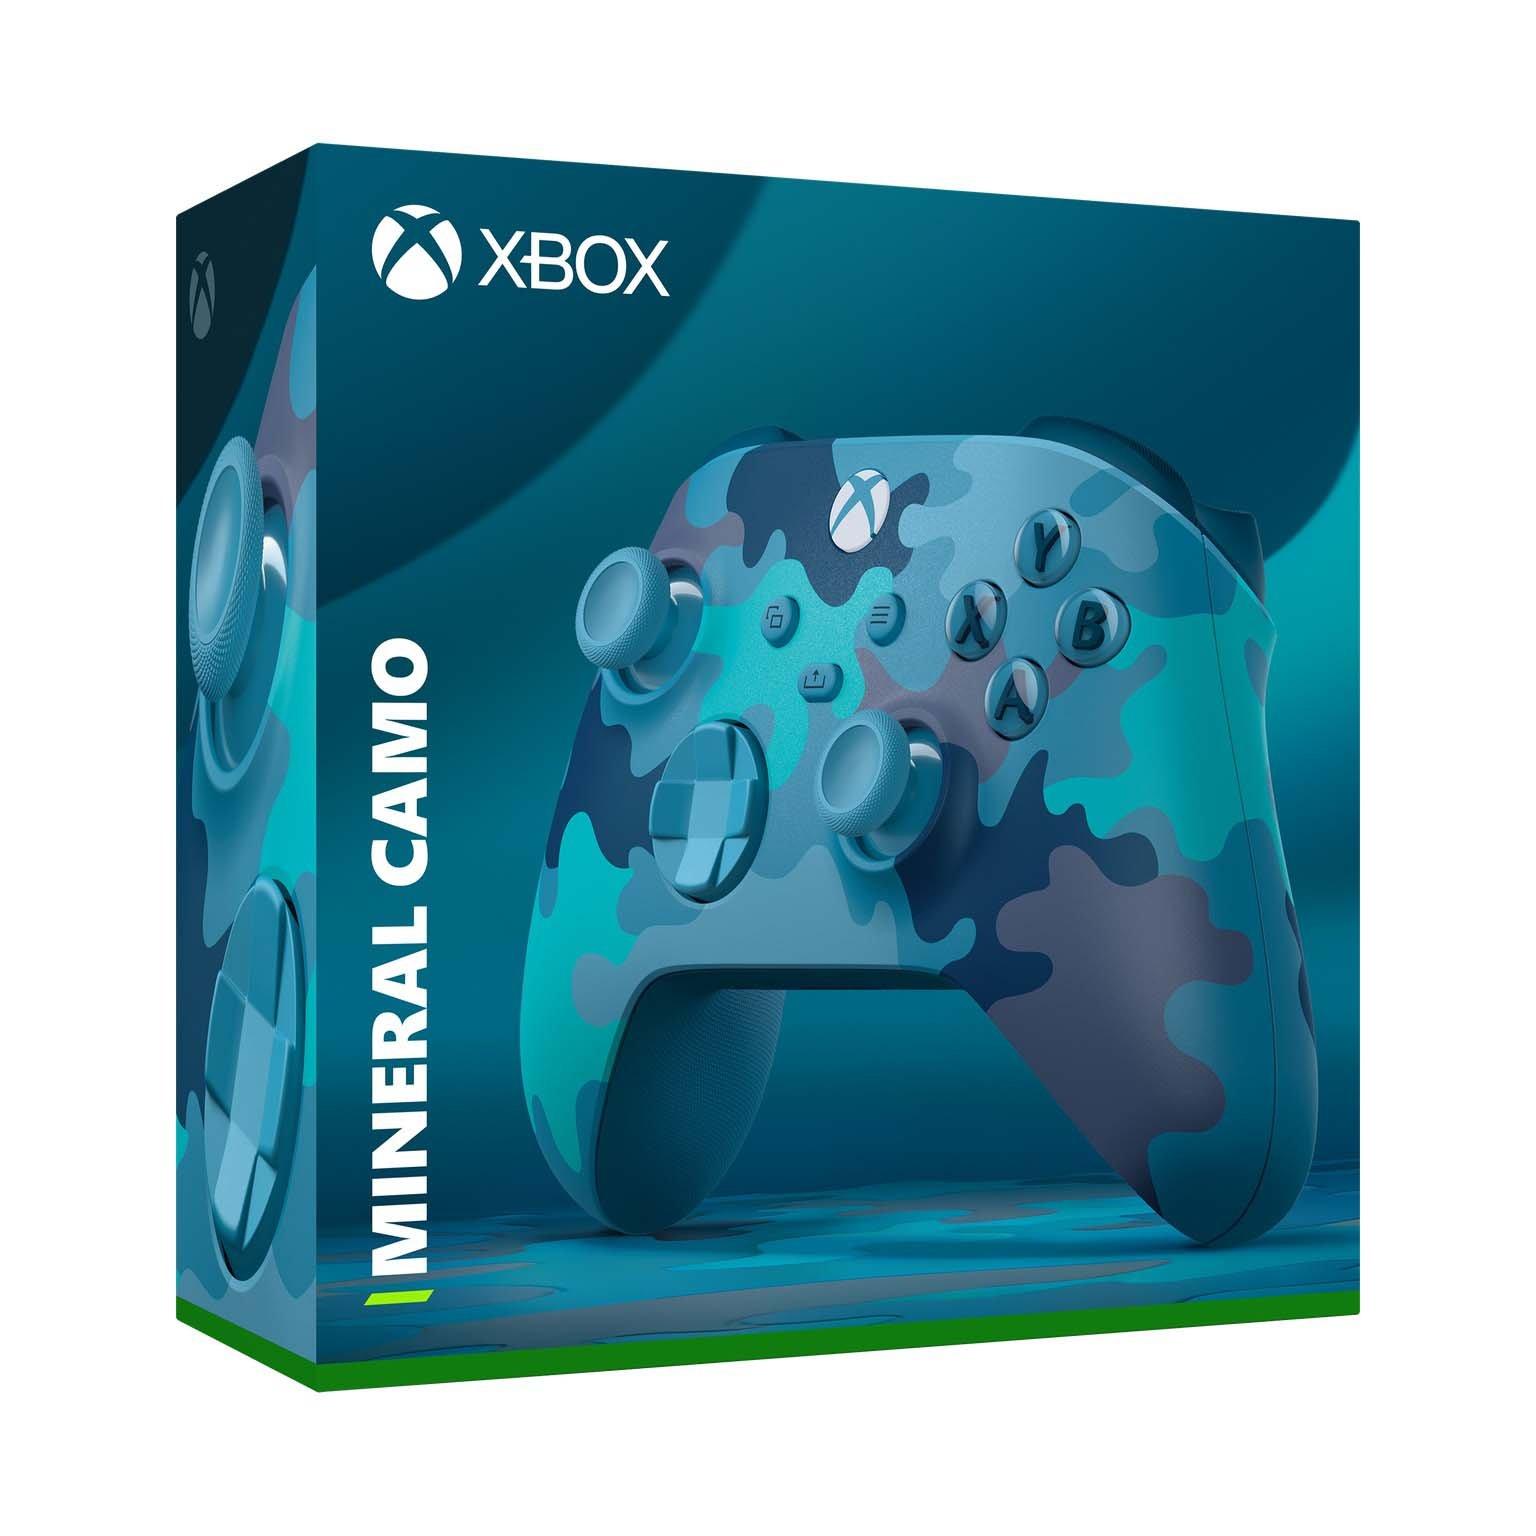 Xbox Wireless Controller – Mineral Camo Special Edition